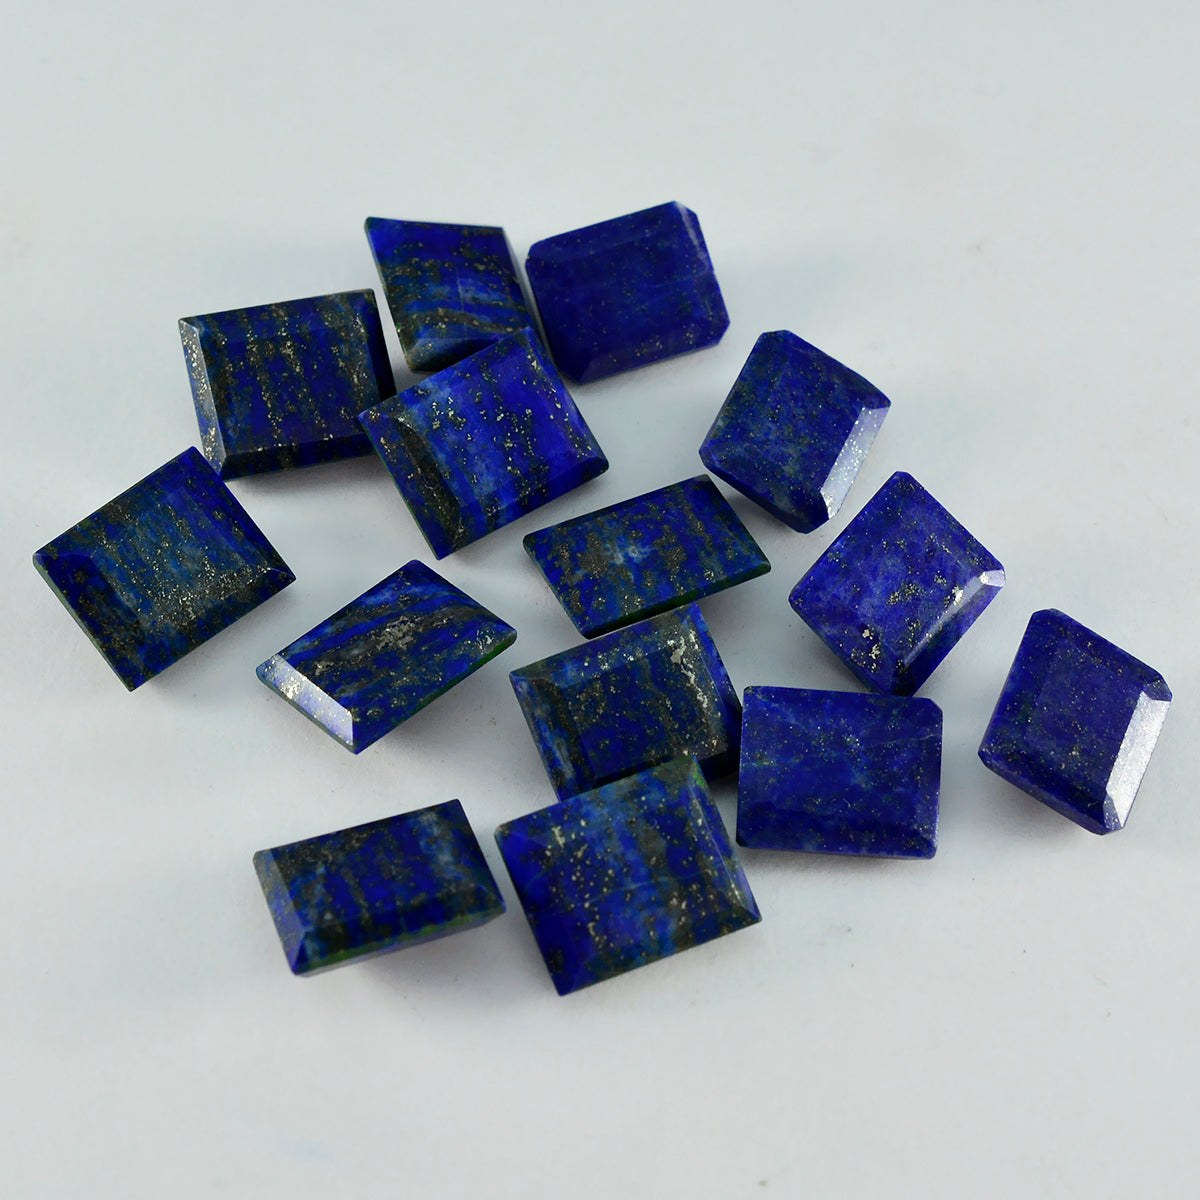 Riyogems 1PC Natural Blue Lapis Lazuli Faceted 12x16 mm Octagon Shape astonishing Quality Gems